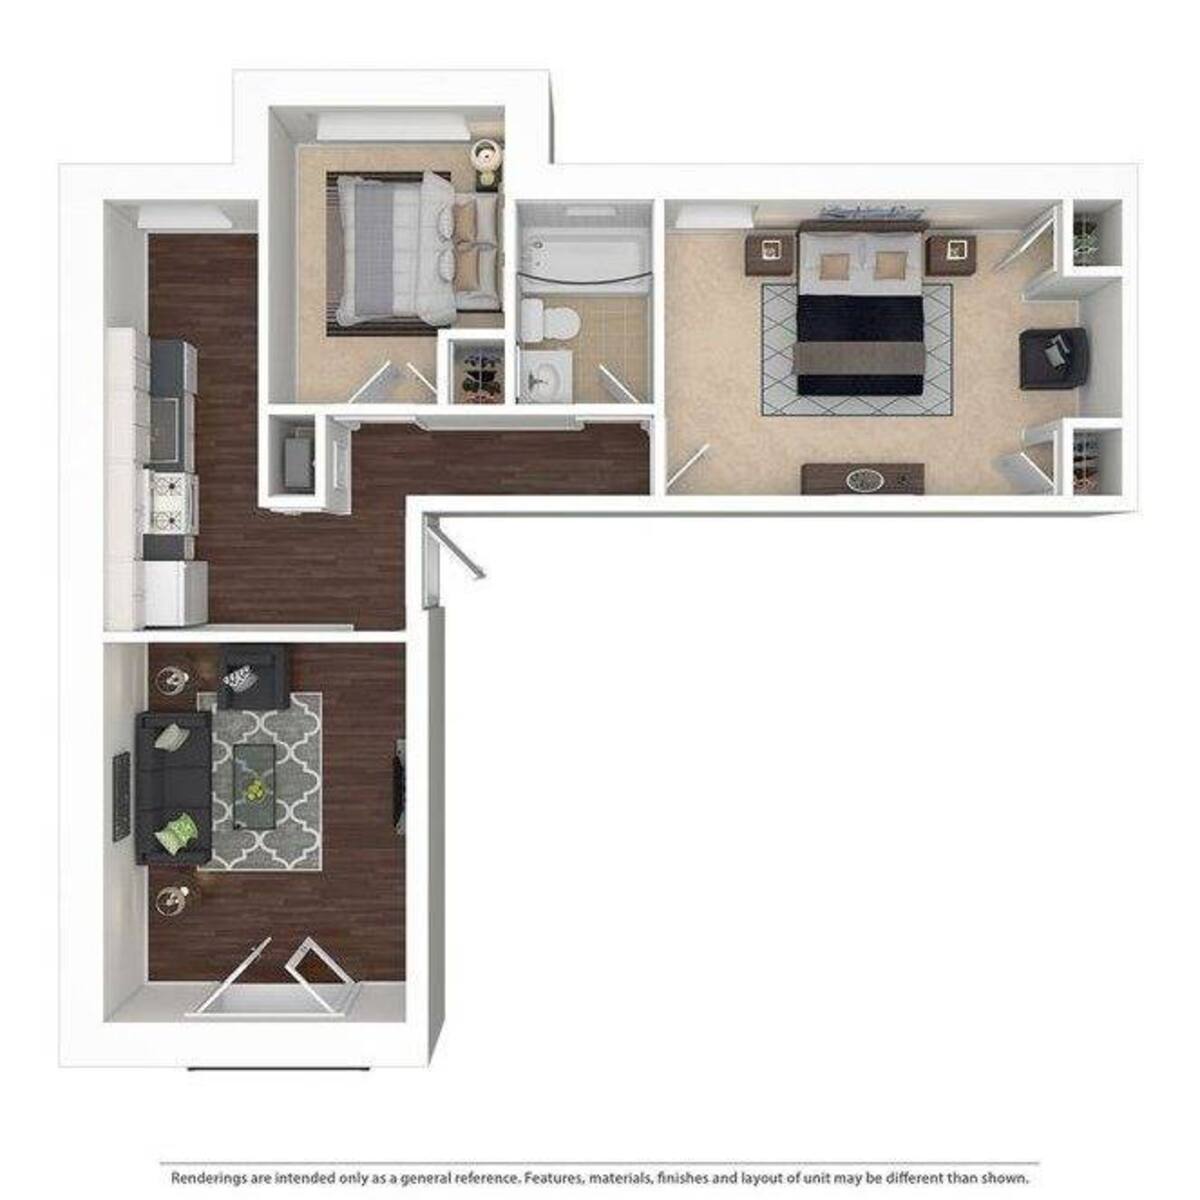 Floorplan diagram for 2 Bedroom/1 Bathroom 518-602, showing 2 bedroom